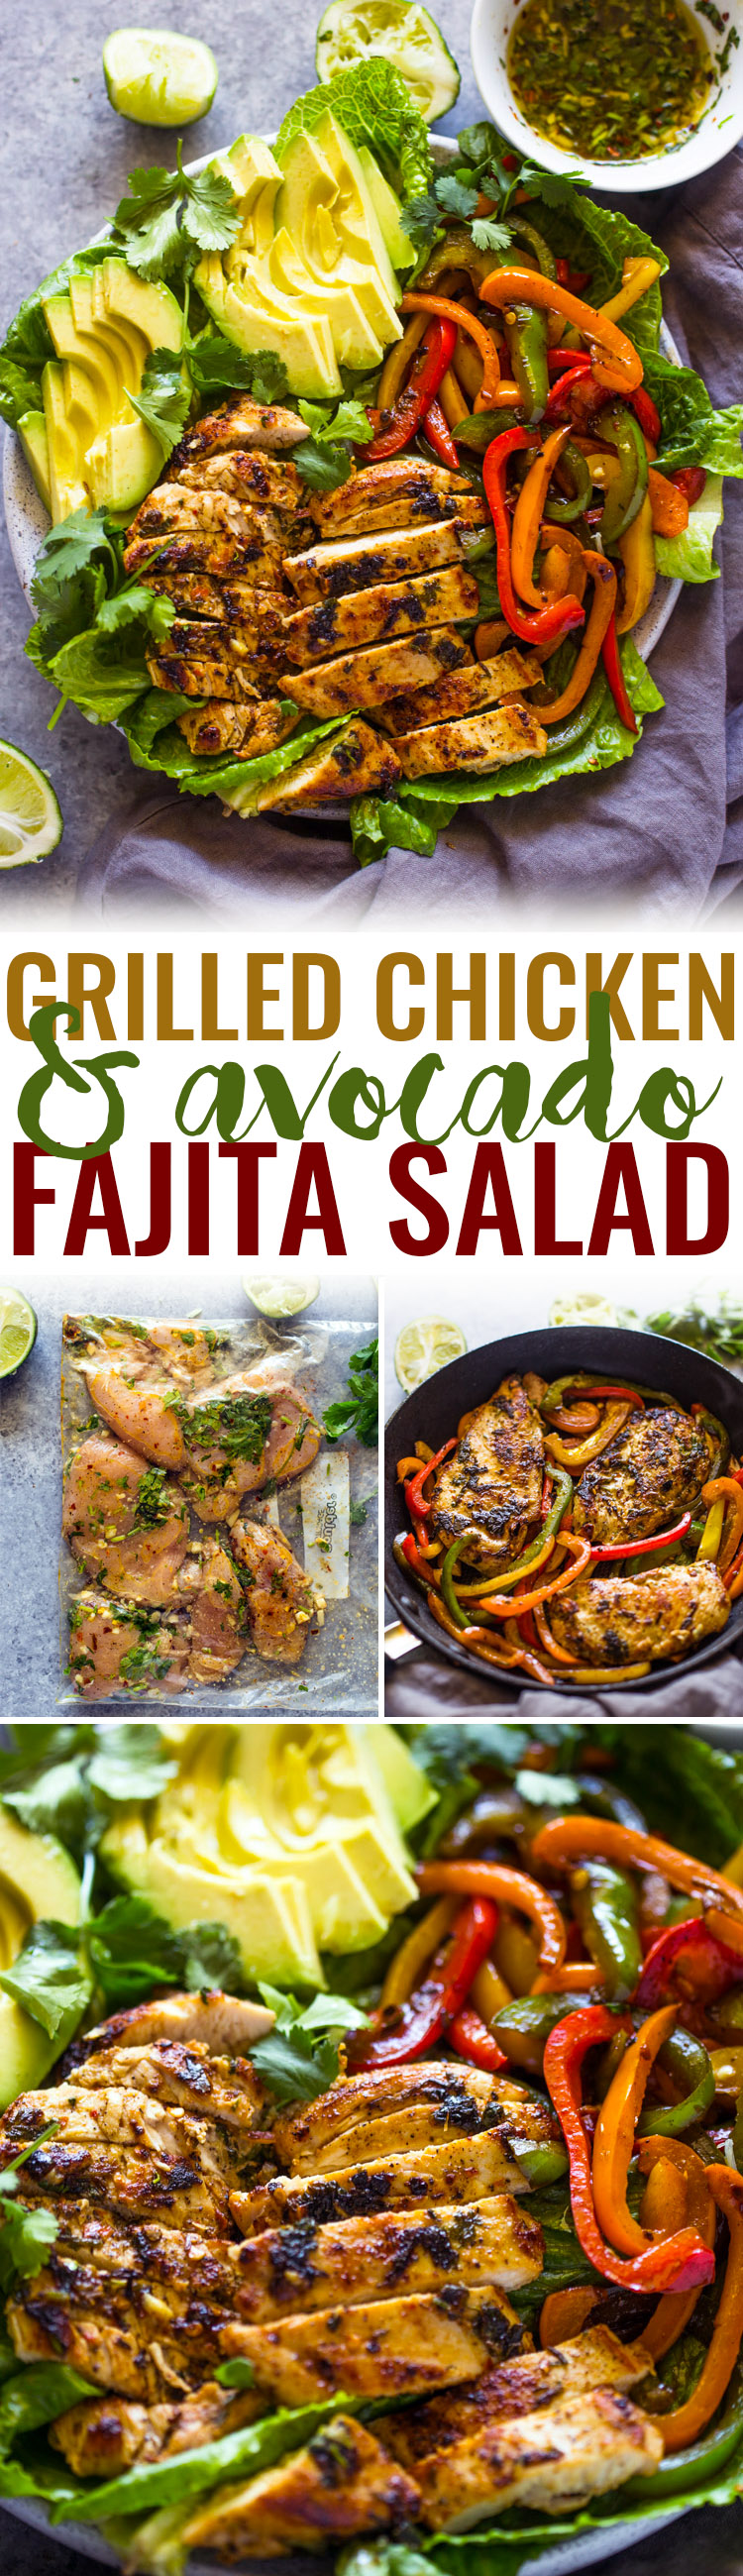 Skinny Grilled Chicken Fajita & Avocado Salad